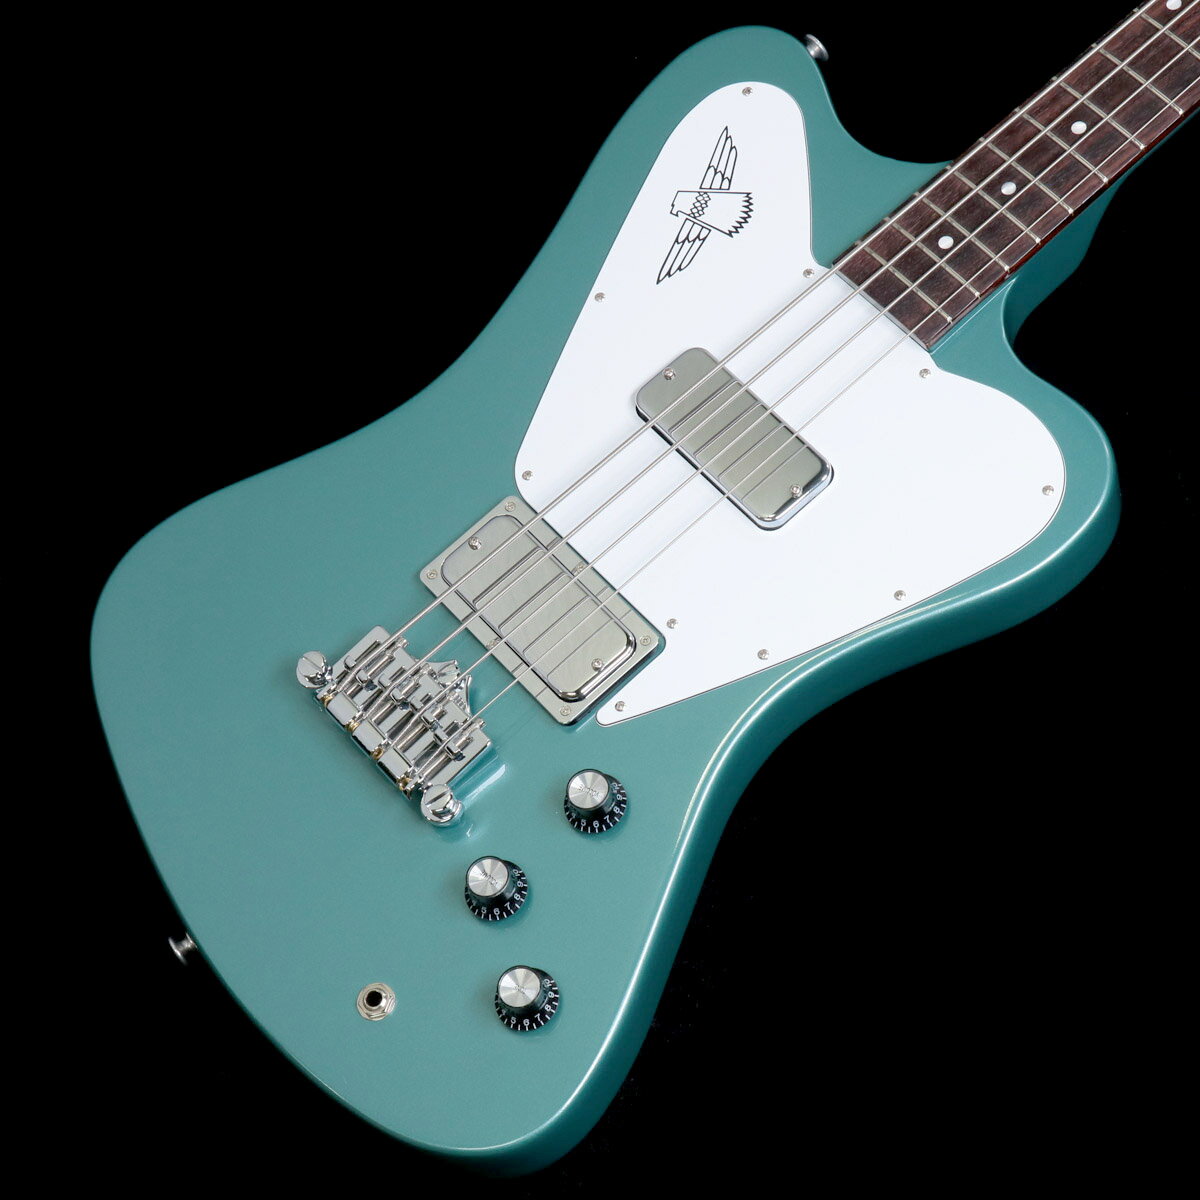 Gibson USA / Non-Reverse Thunderbird Faded Pelham Blue [3.92kg/実物画像][2NDアウトレット特価] ギブソン ノンリバース サンダーバード エレキベース 【S/N:212830352】【池袋店】【YRK】